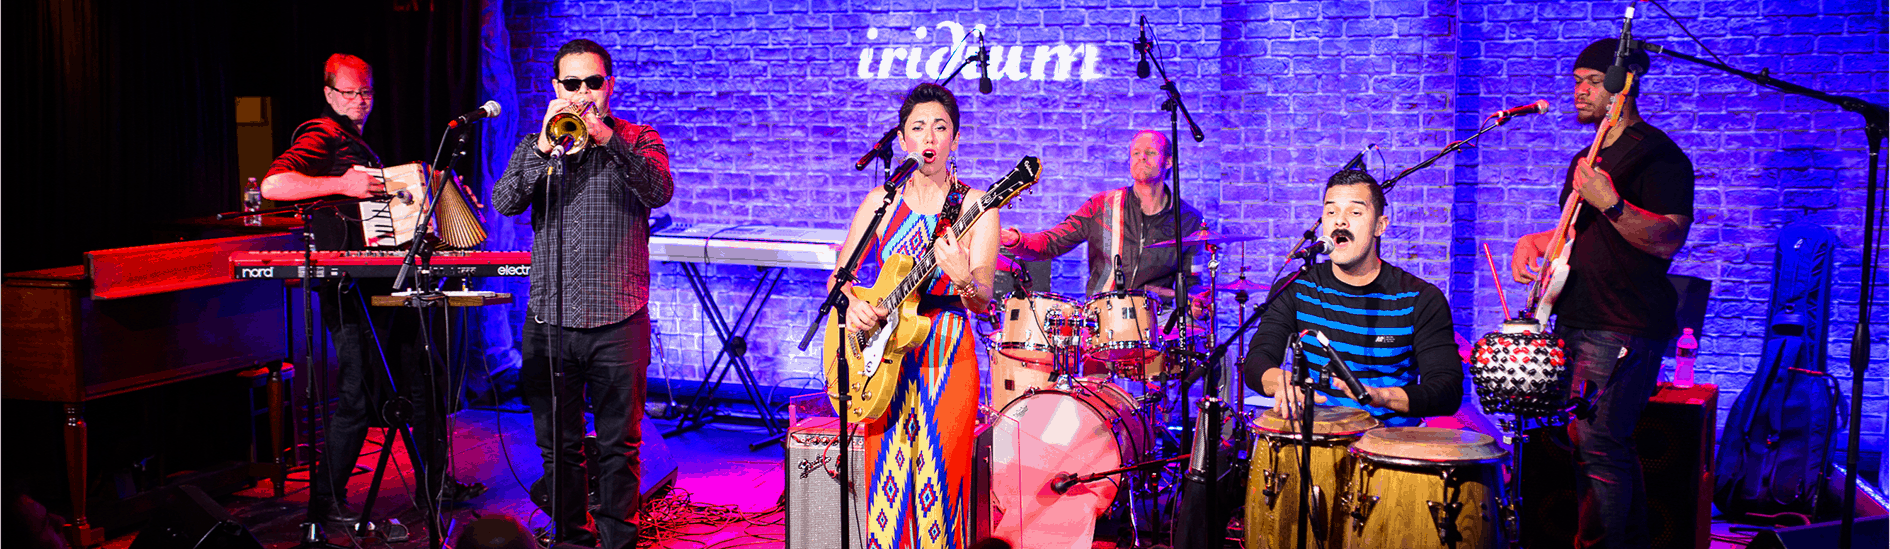 APAPNYC 2018 Showcase Gina Chavez at Iridium by Adam Kissick/APAP